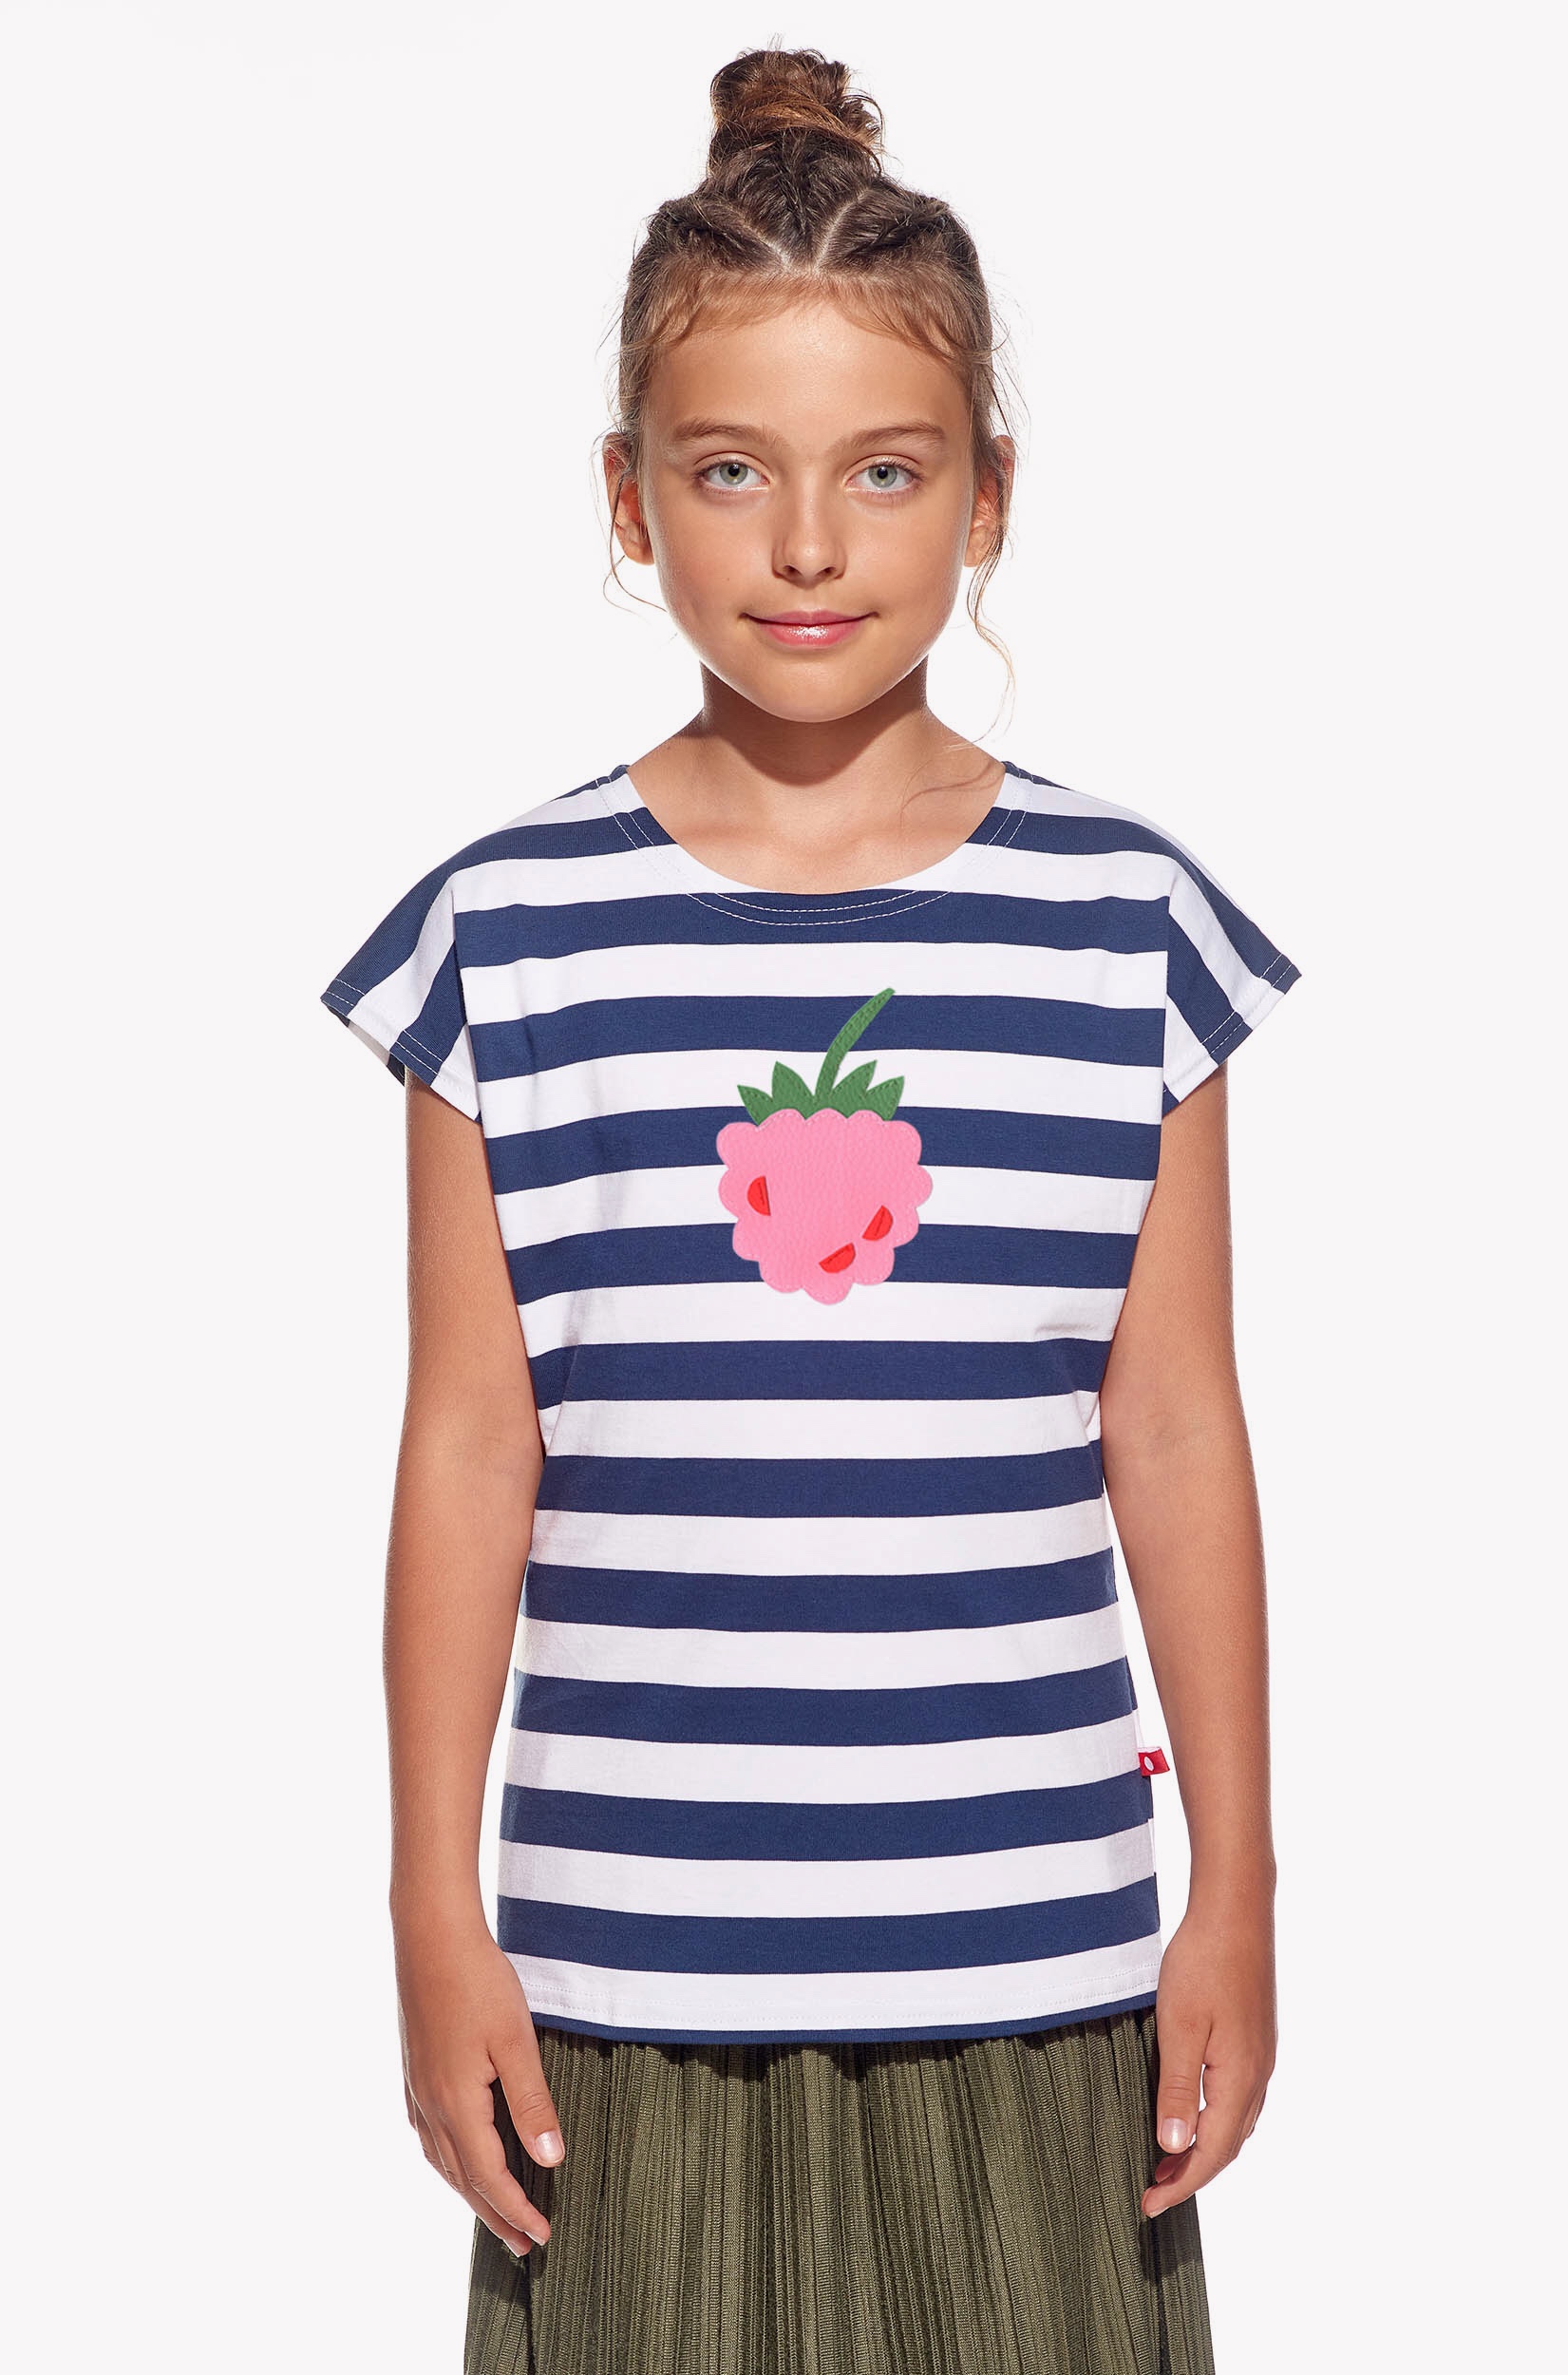 Shirt with raspberry